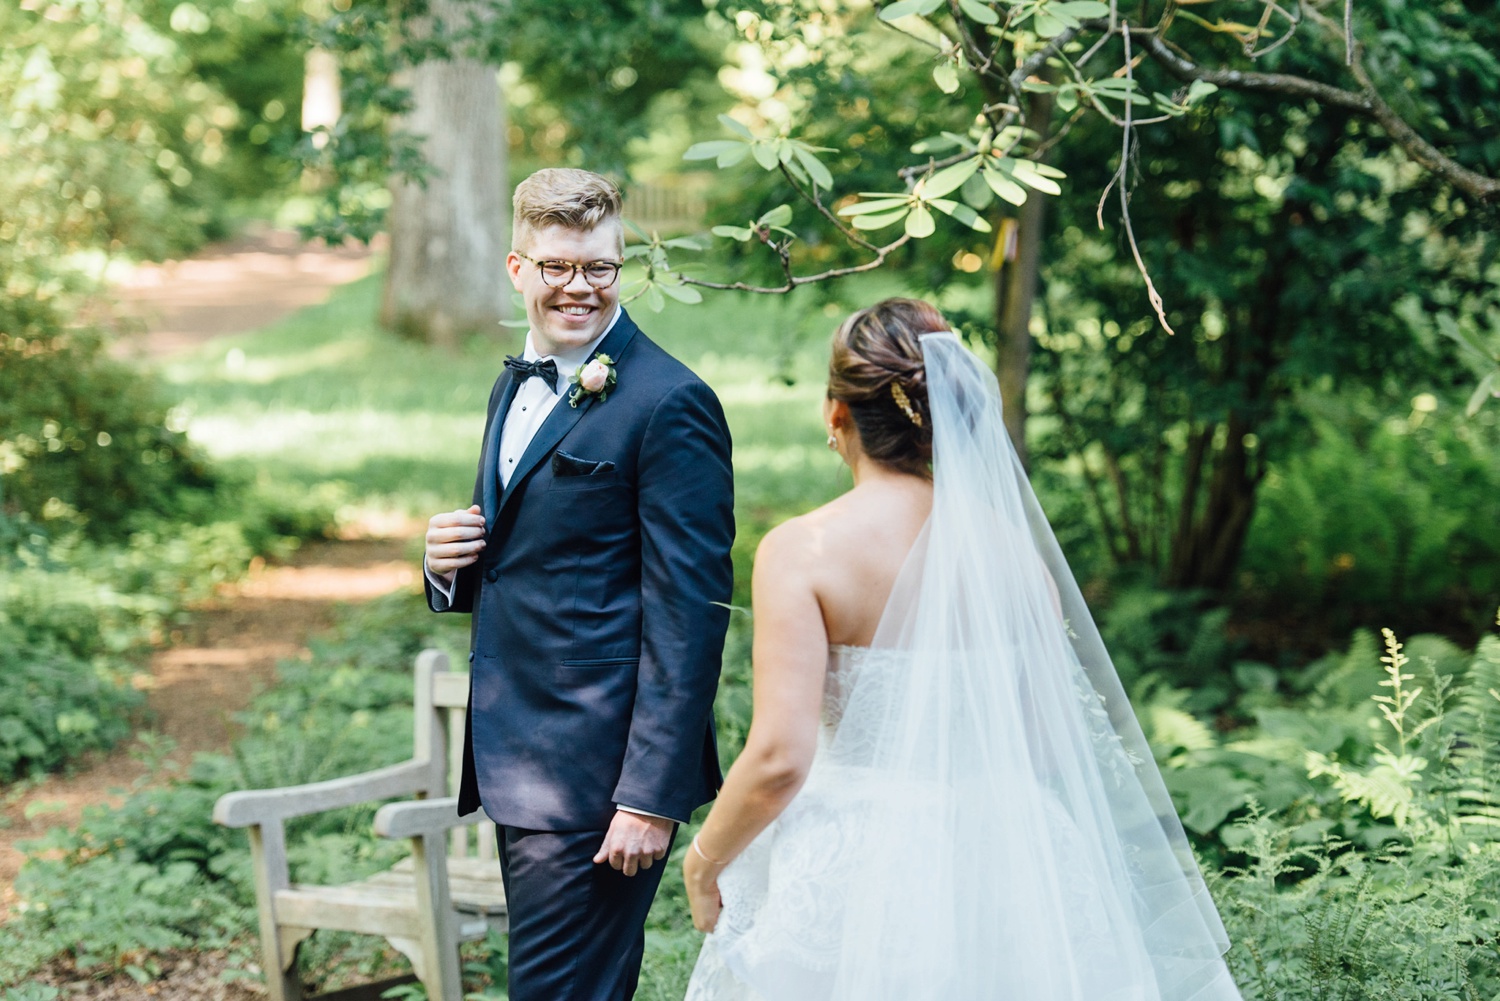 Colleen + Matt - Winterthur Wedding - Delaware Wedding Photographer - Alison Dunn Photography photo